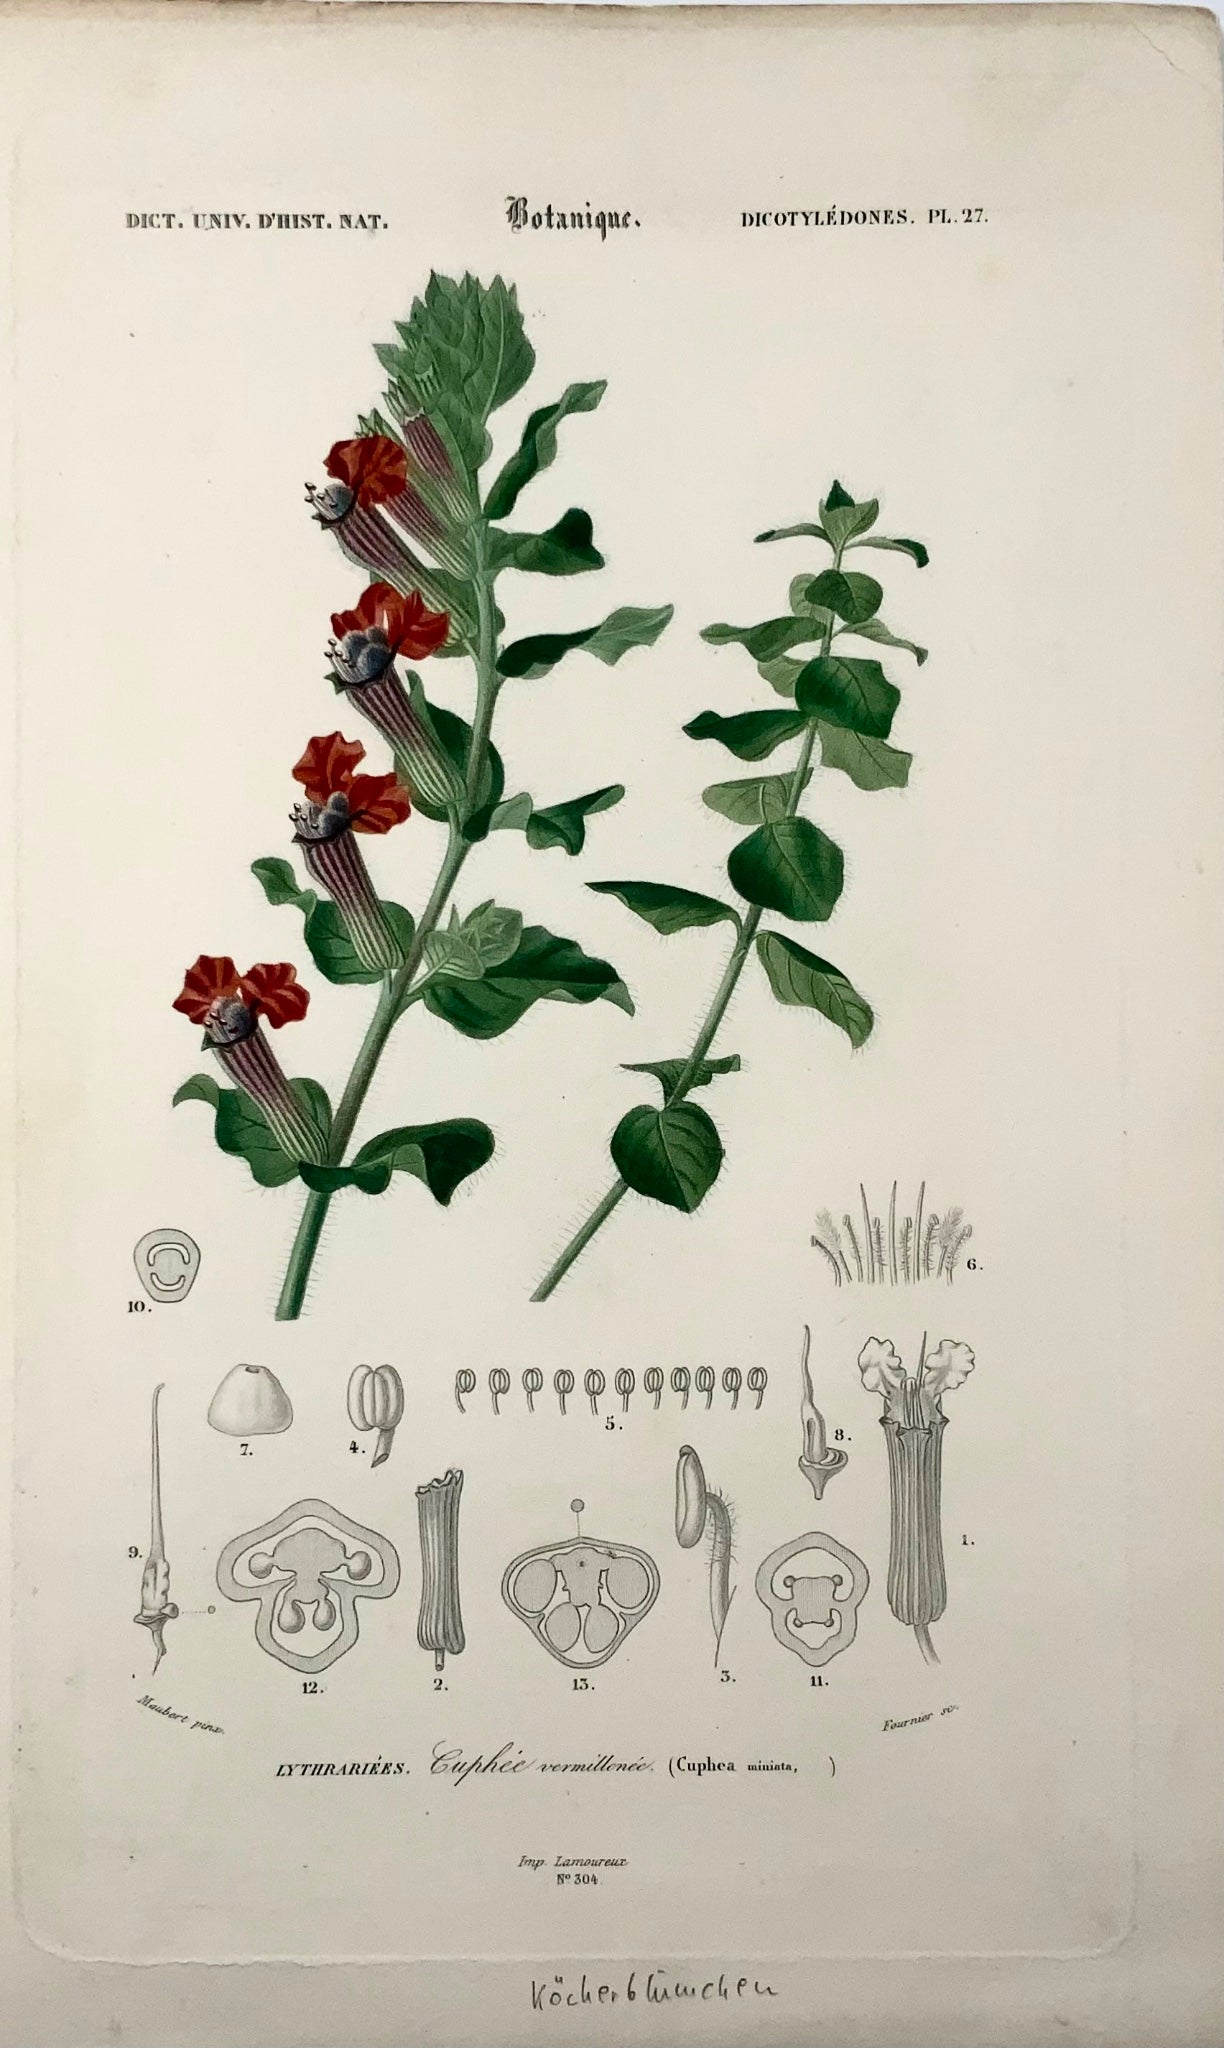 1849 Lythraceae, cupheas, botany, Ed. Maubert, original hand colour